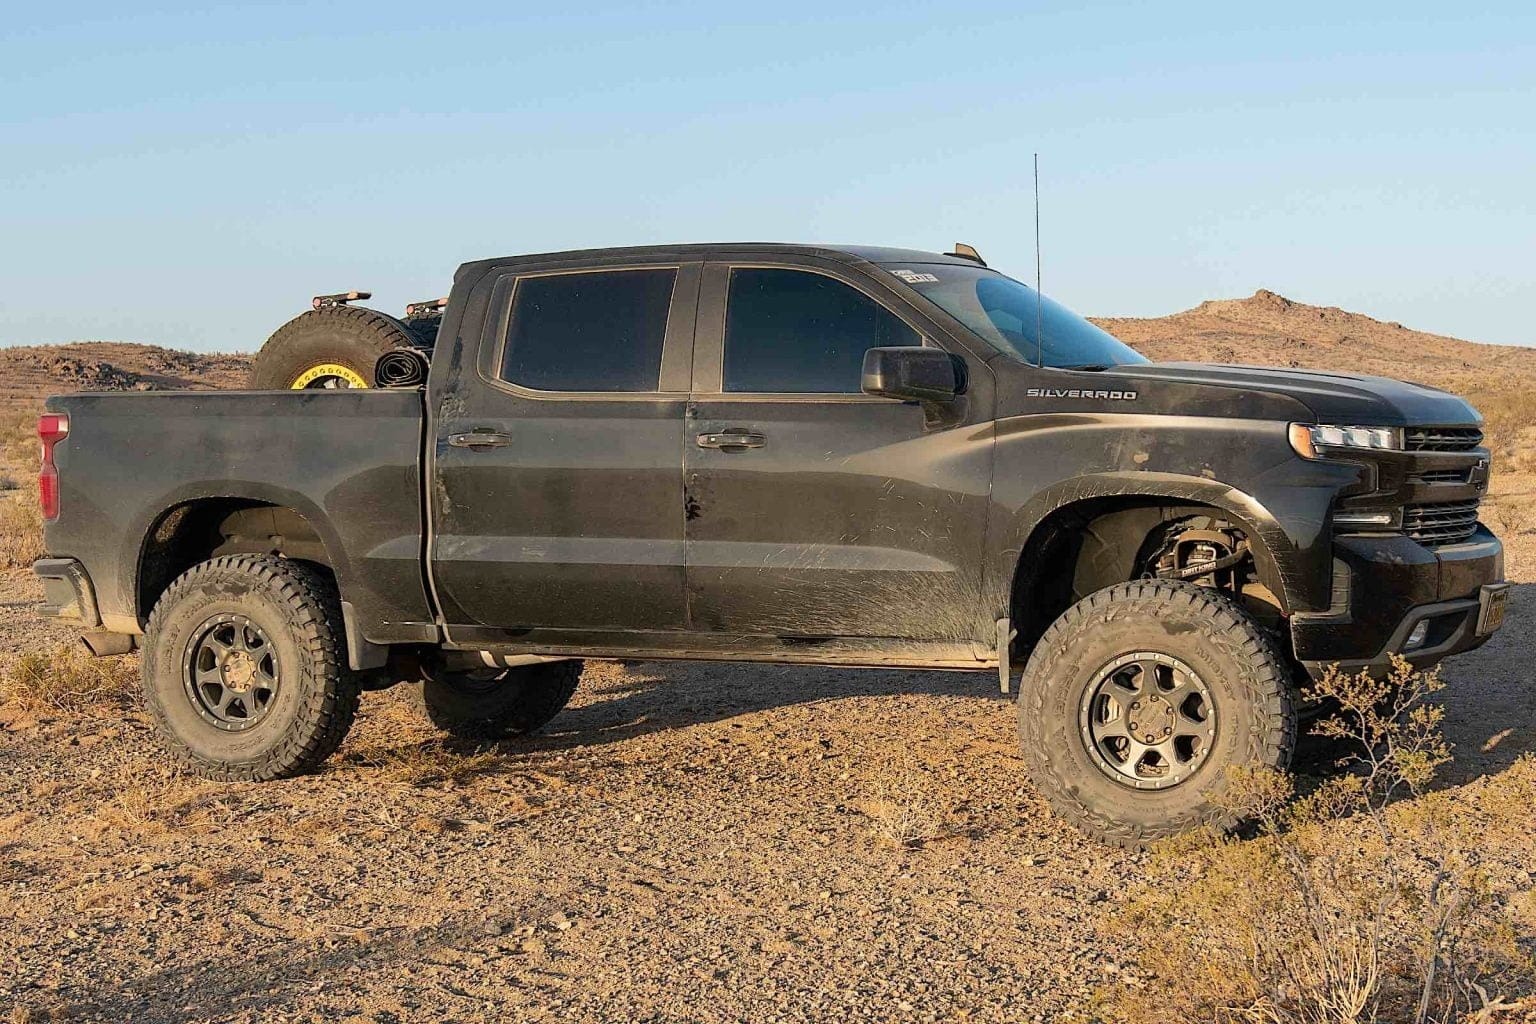 A 2019 Chevrolet Silverado in the desert.